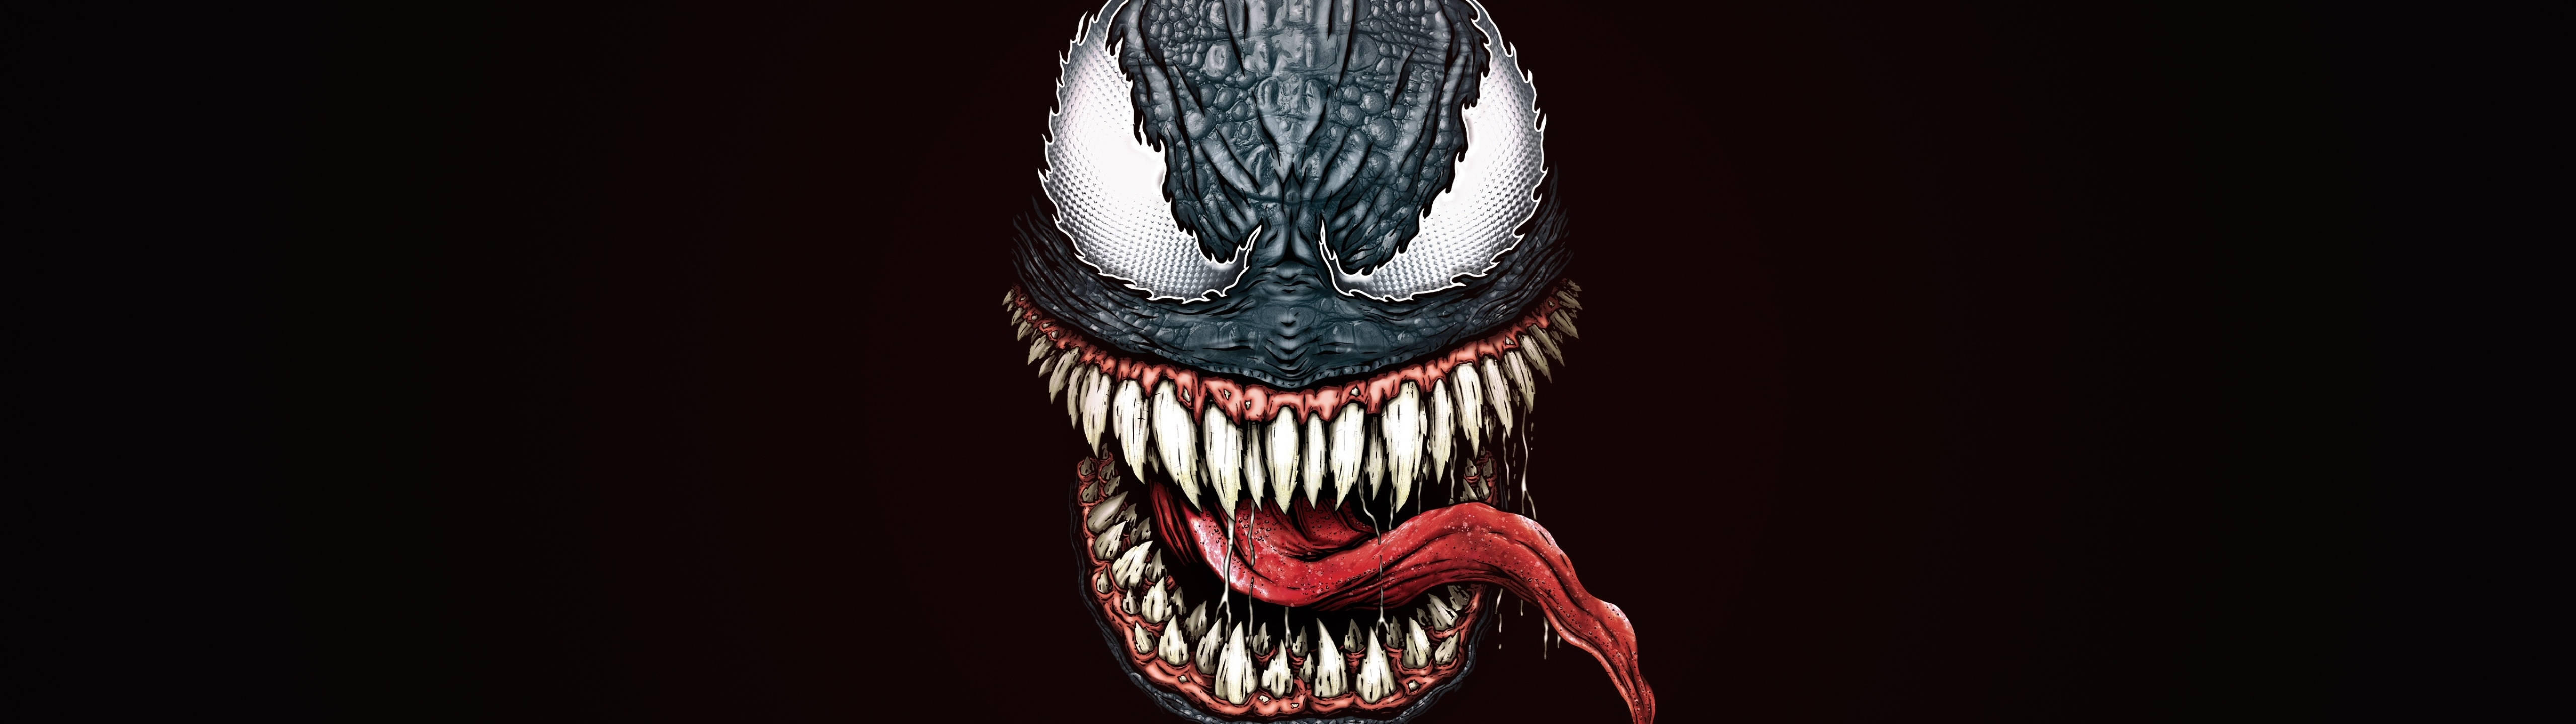 Marvel Antihero Venom 5120 x 1440 Wallpaper